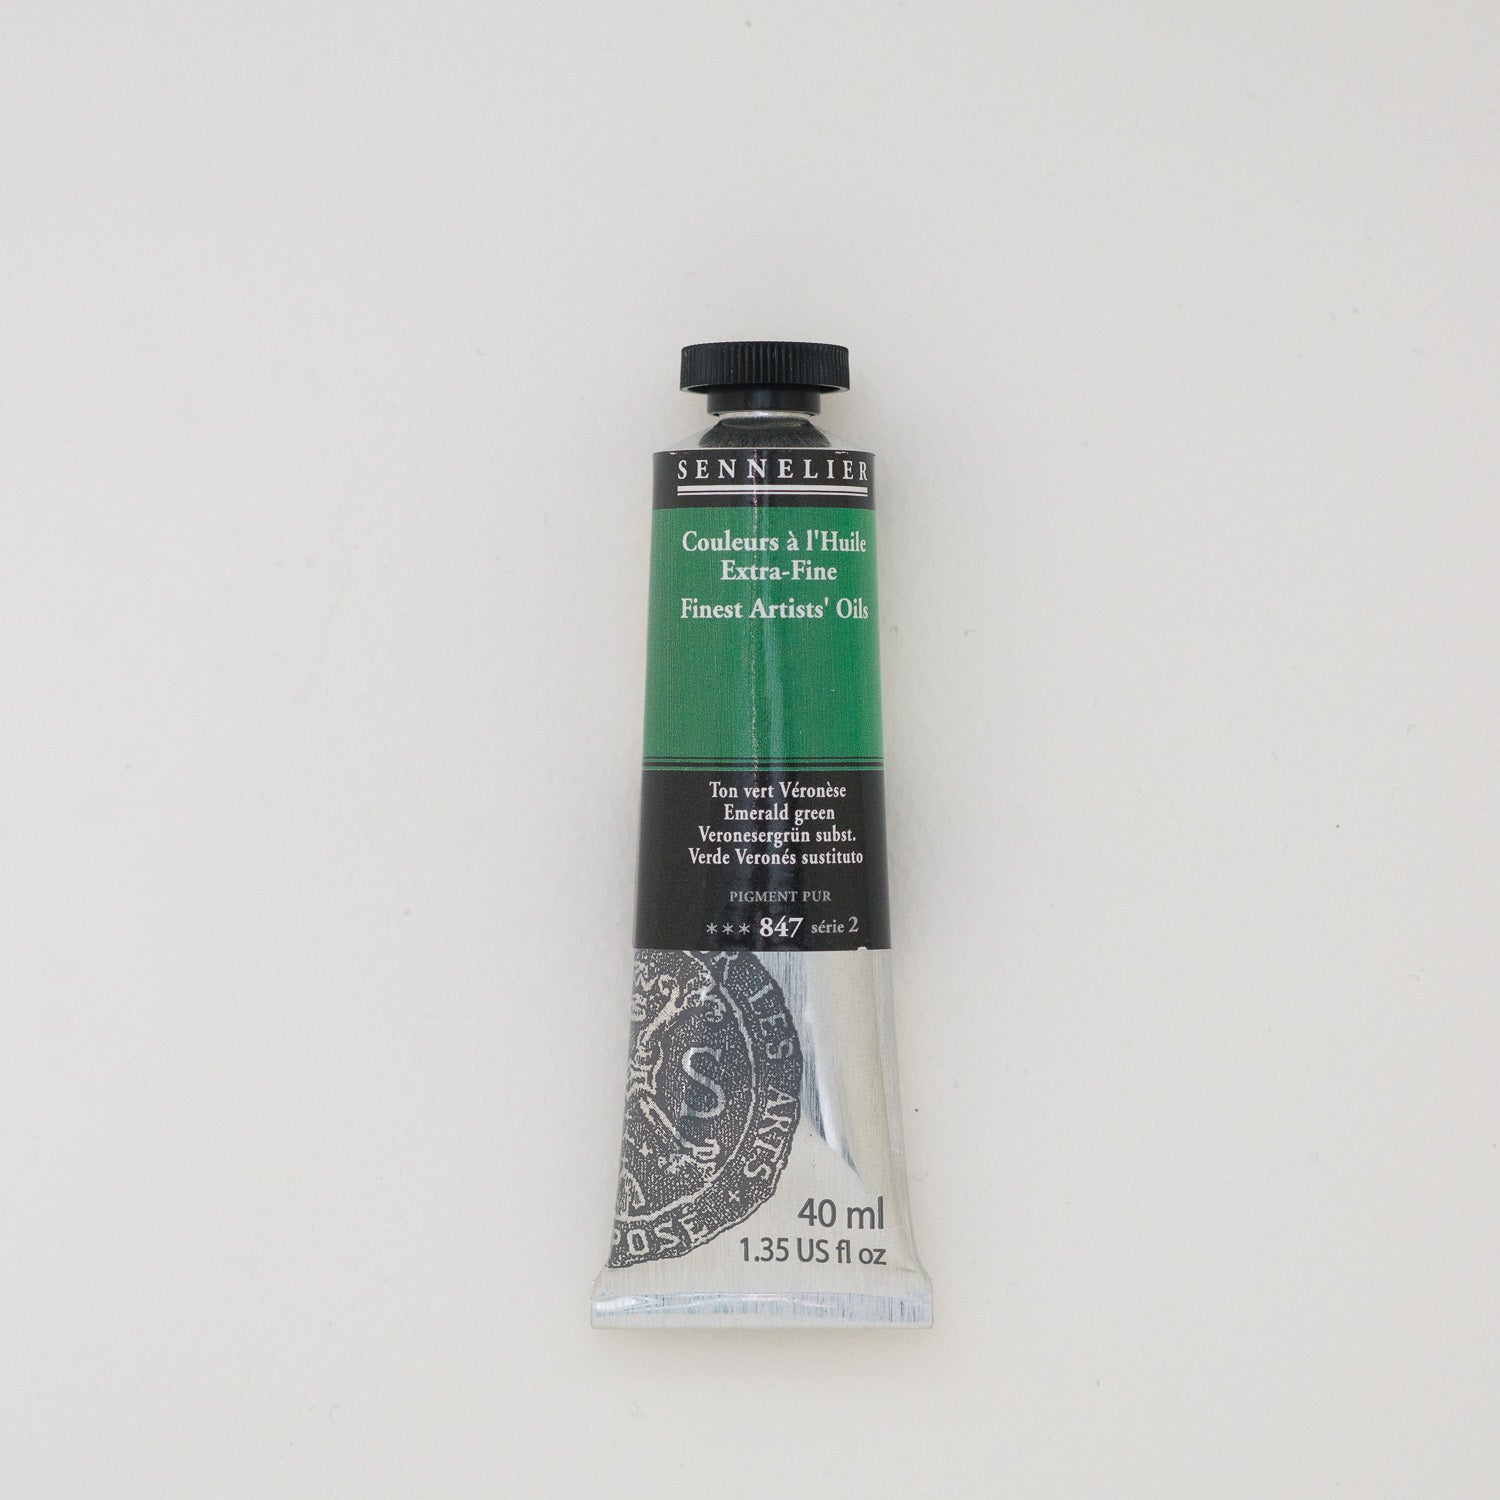 Sennelier Oil Paint 40ml - Series 2 - Melbourne Etching Supplies